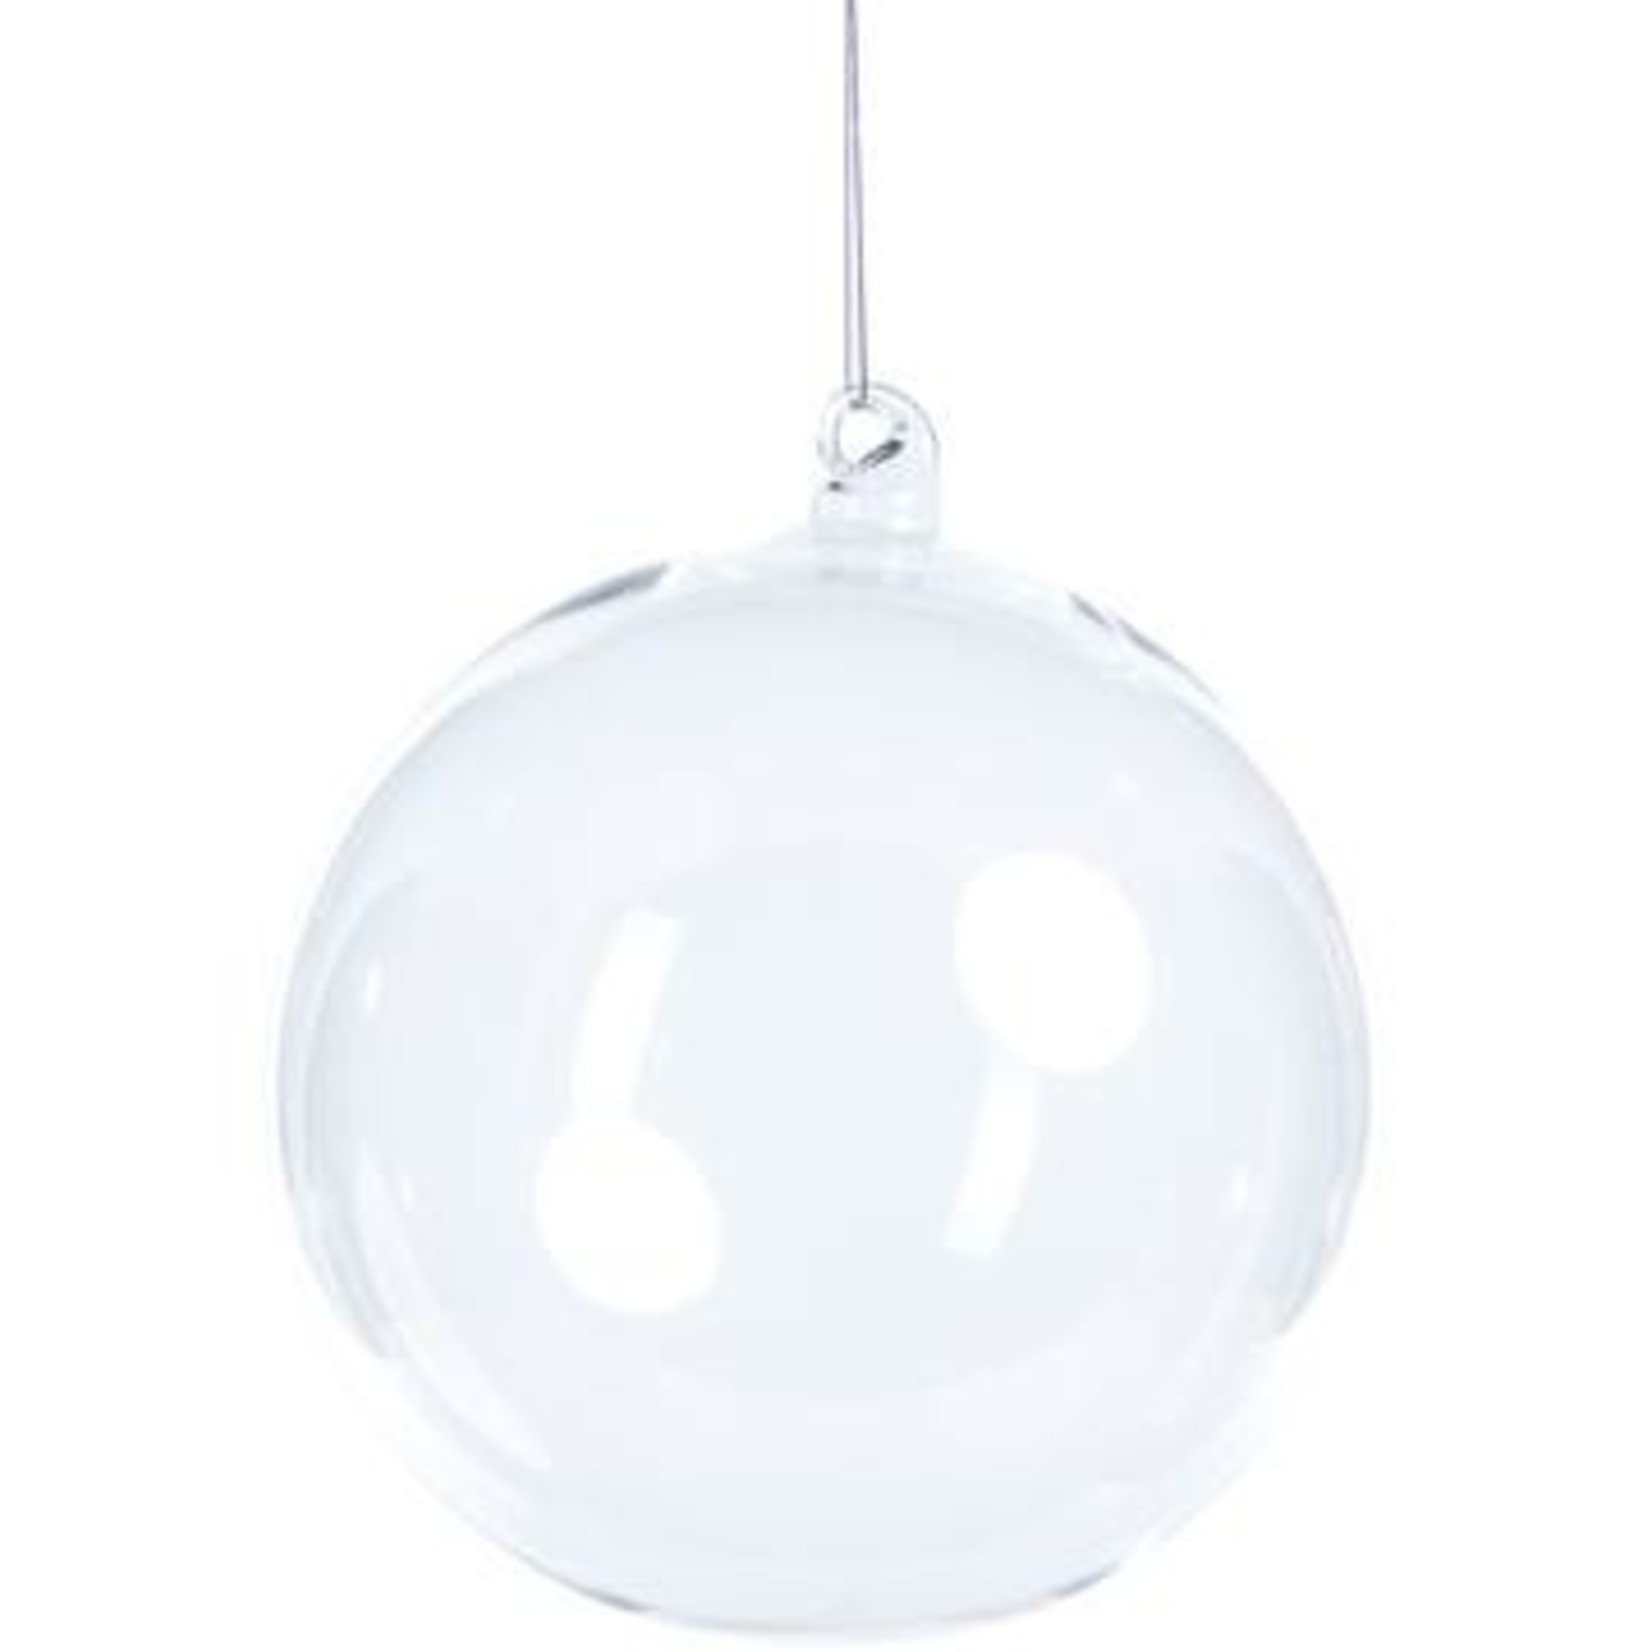 Zodax Clear Ball Ornament (4.75")